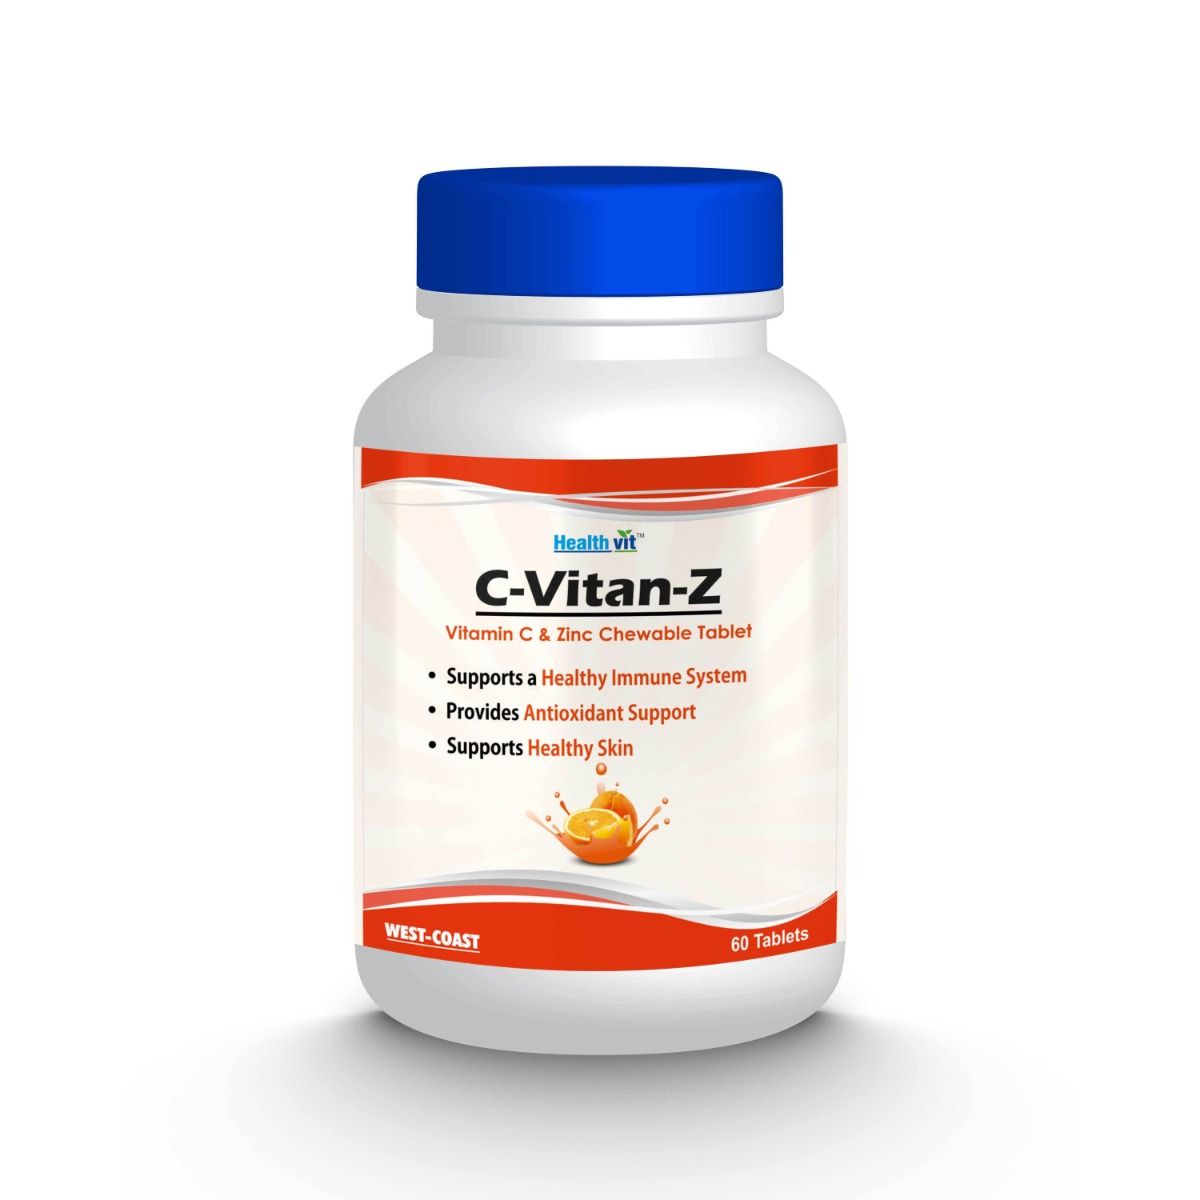 Buy Healthvit C-Vitan-Z Vitamin C & Zinc Chewable, 60 Tablets Online